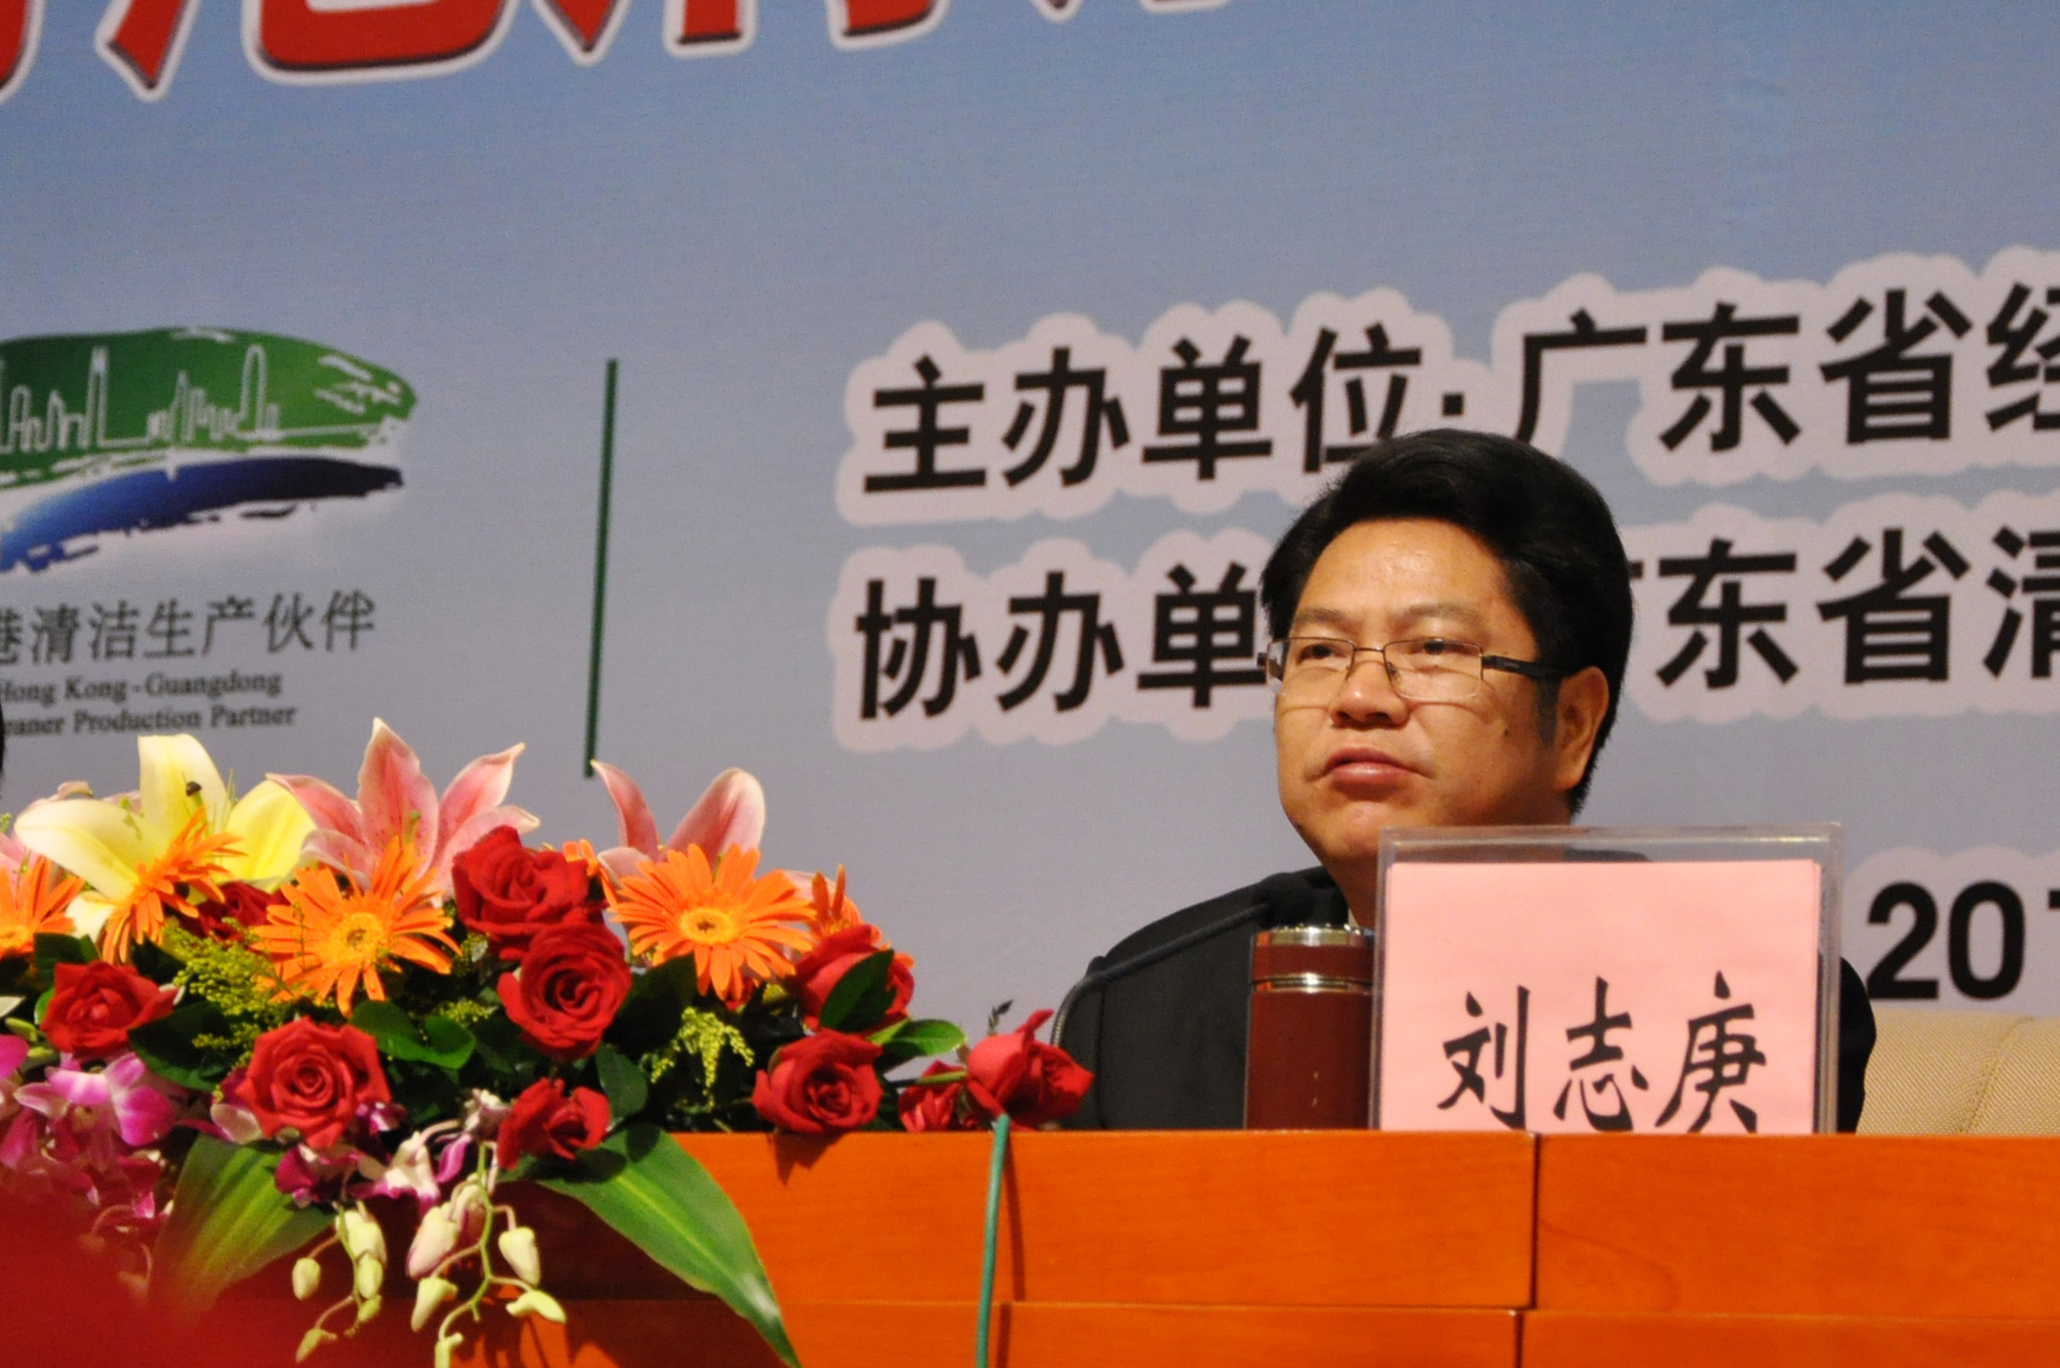 Liu Zhigeng, the Deputy Secretary General for Guangdong Province